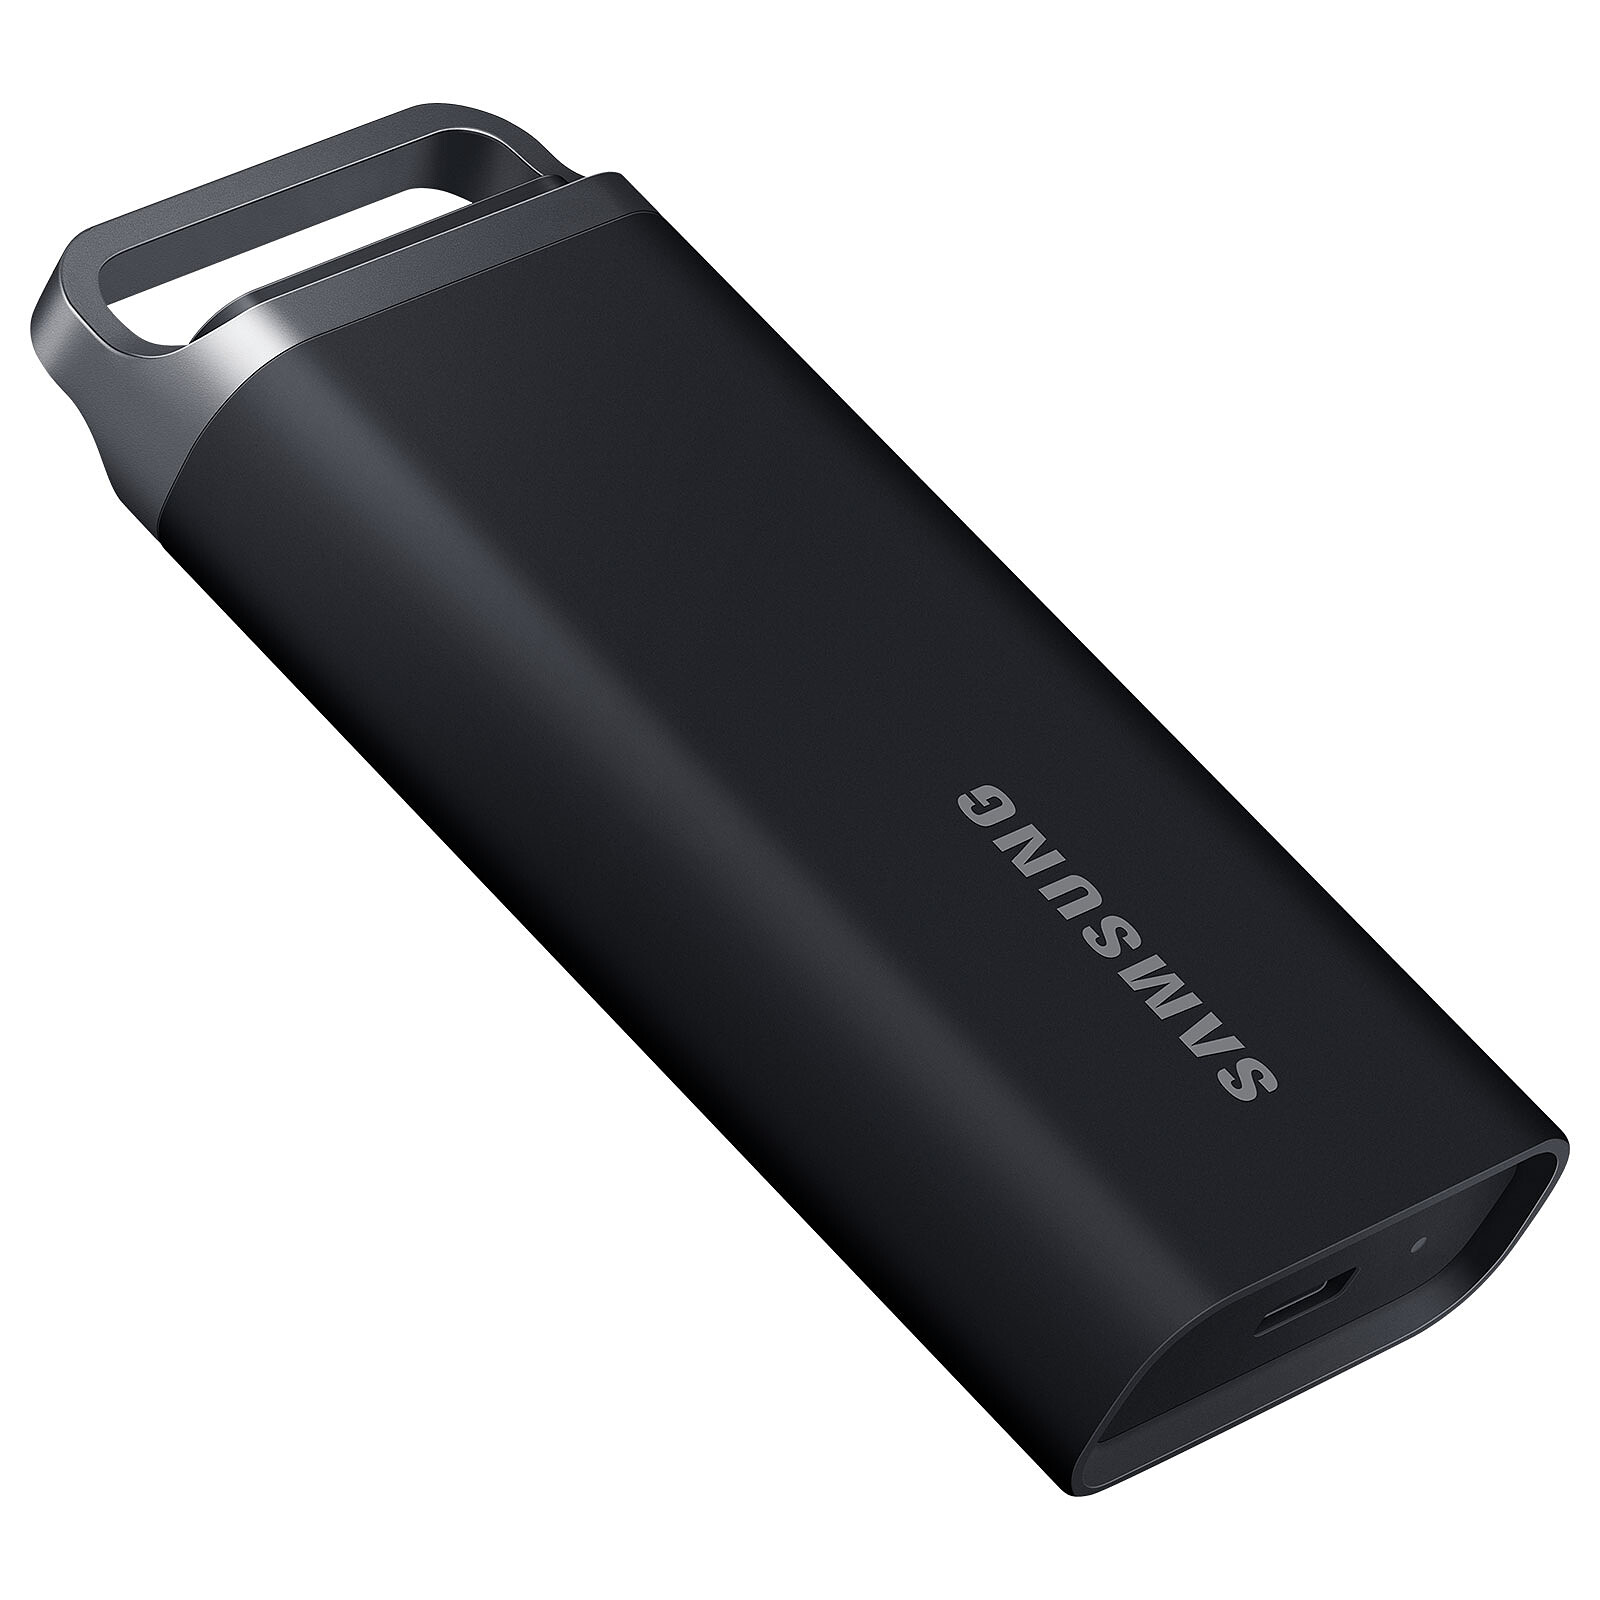 Samsung Portable SSD T7 Shield 4TB Review: Pro-Grade USB-C Storage